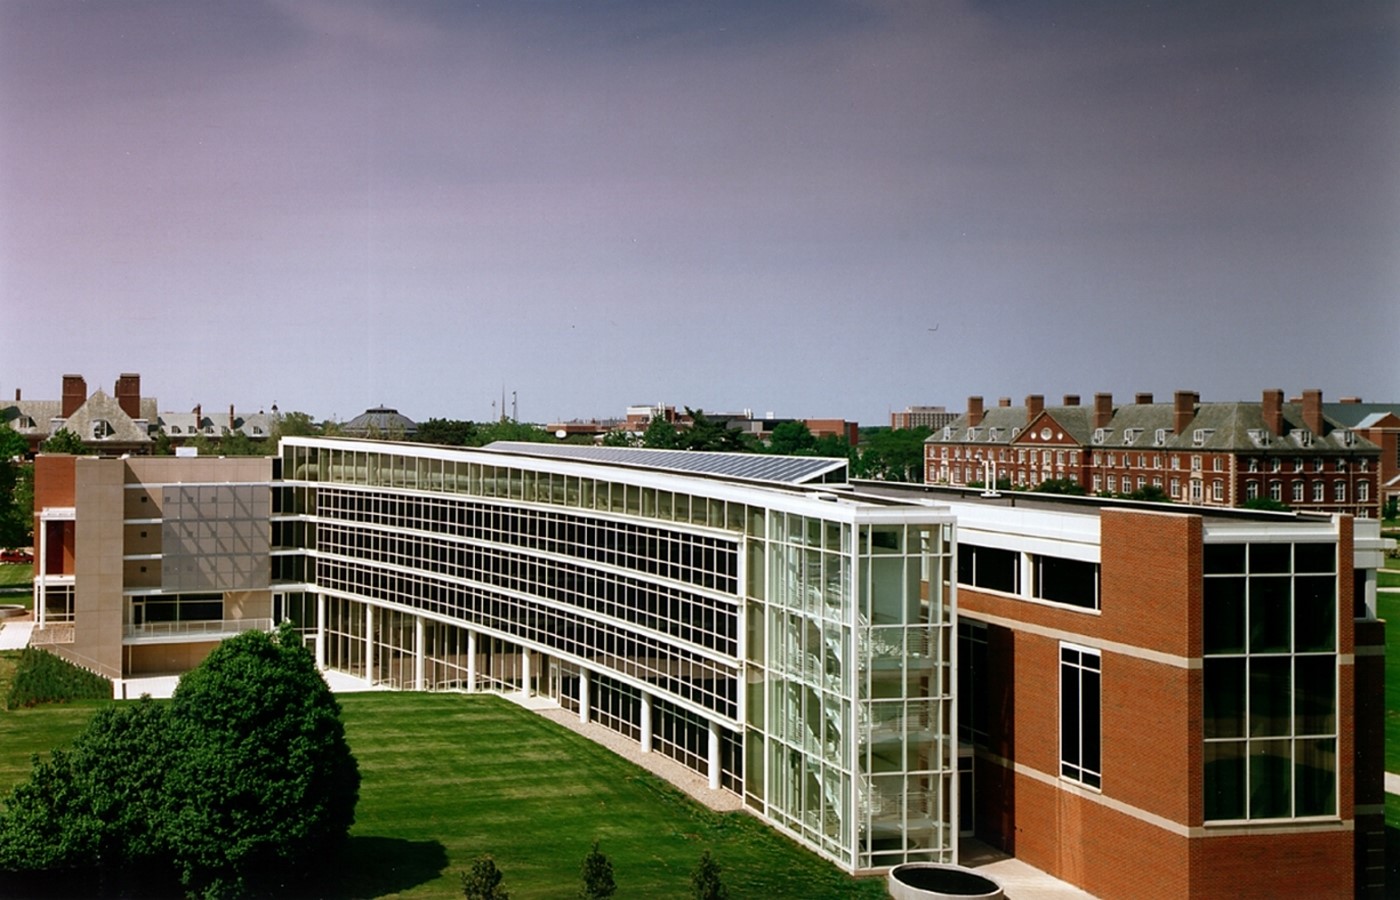 The University of Illinois at Urbana Champaign - Sheet2